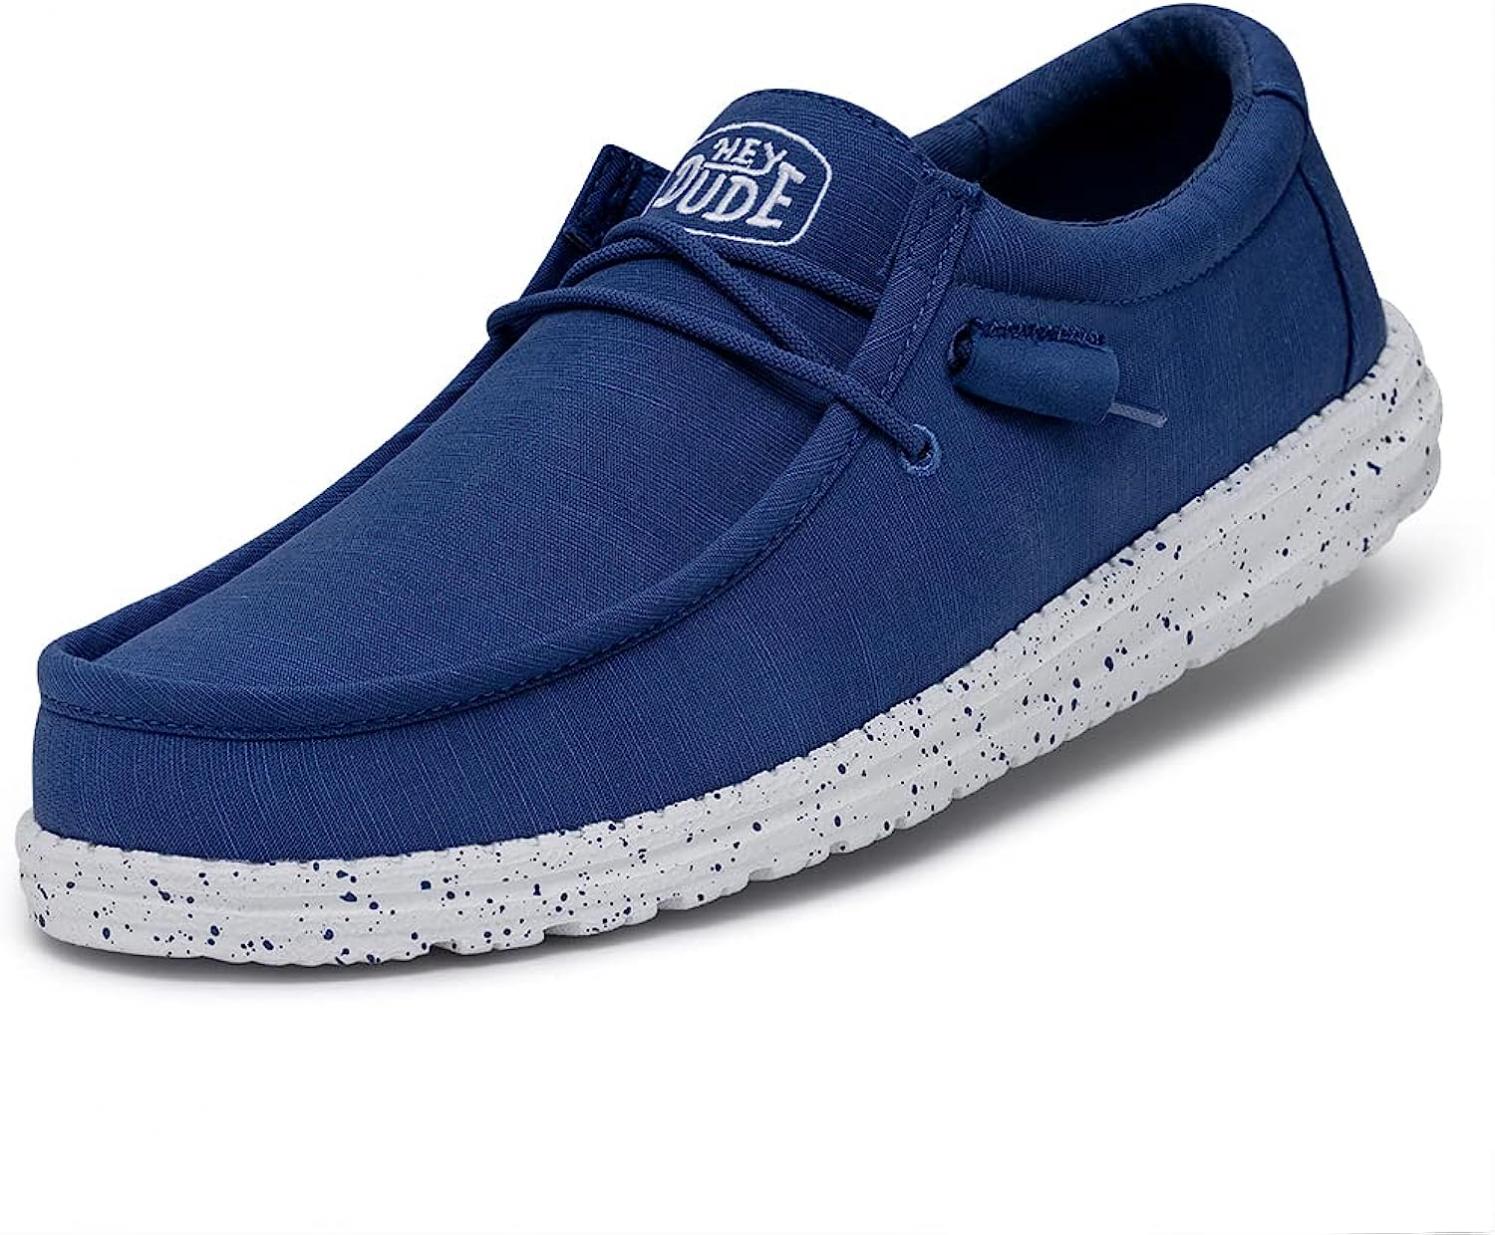 Hey Dude Men's Wally Slub Canvas True Blue Size 10| Men's Loafers | Men's Slip On Shoes | Comfortable & Light-Weight